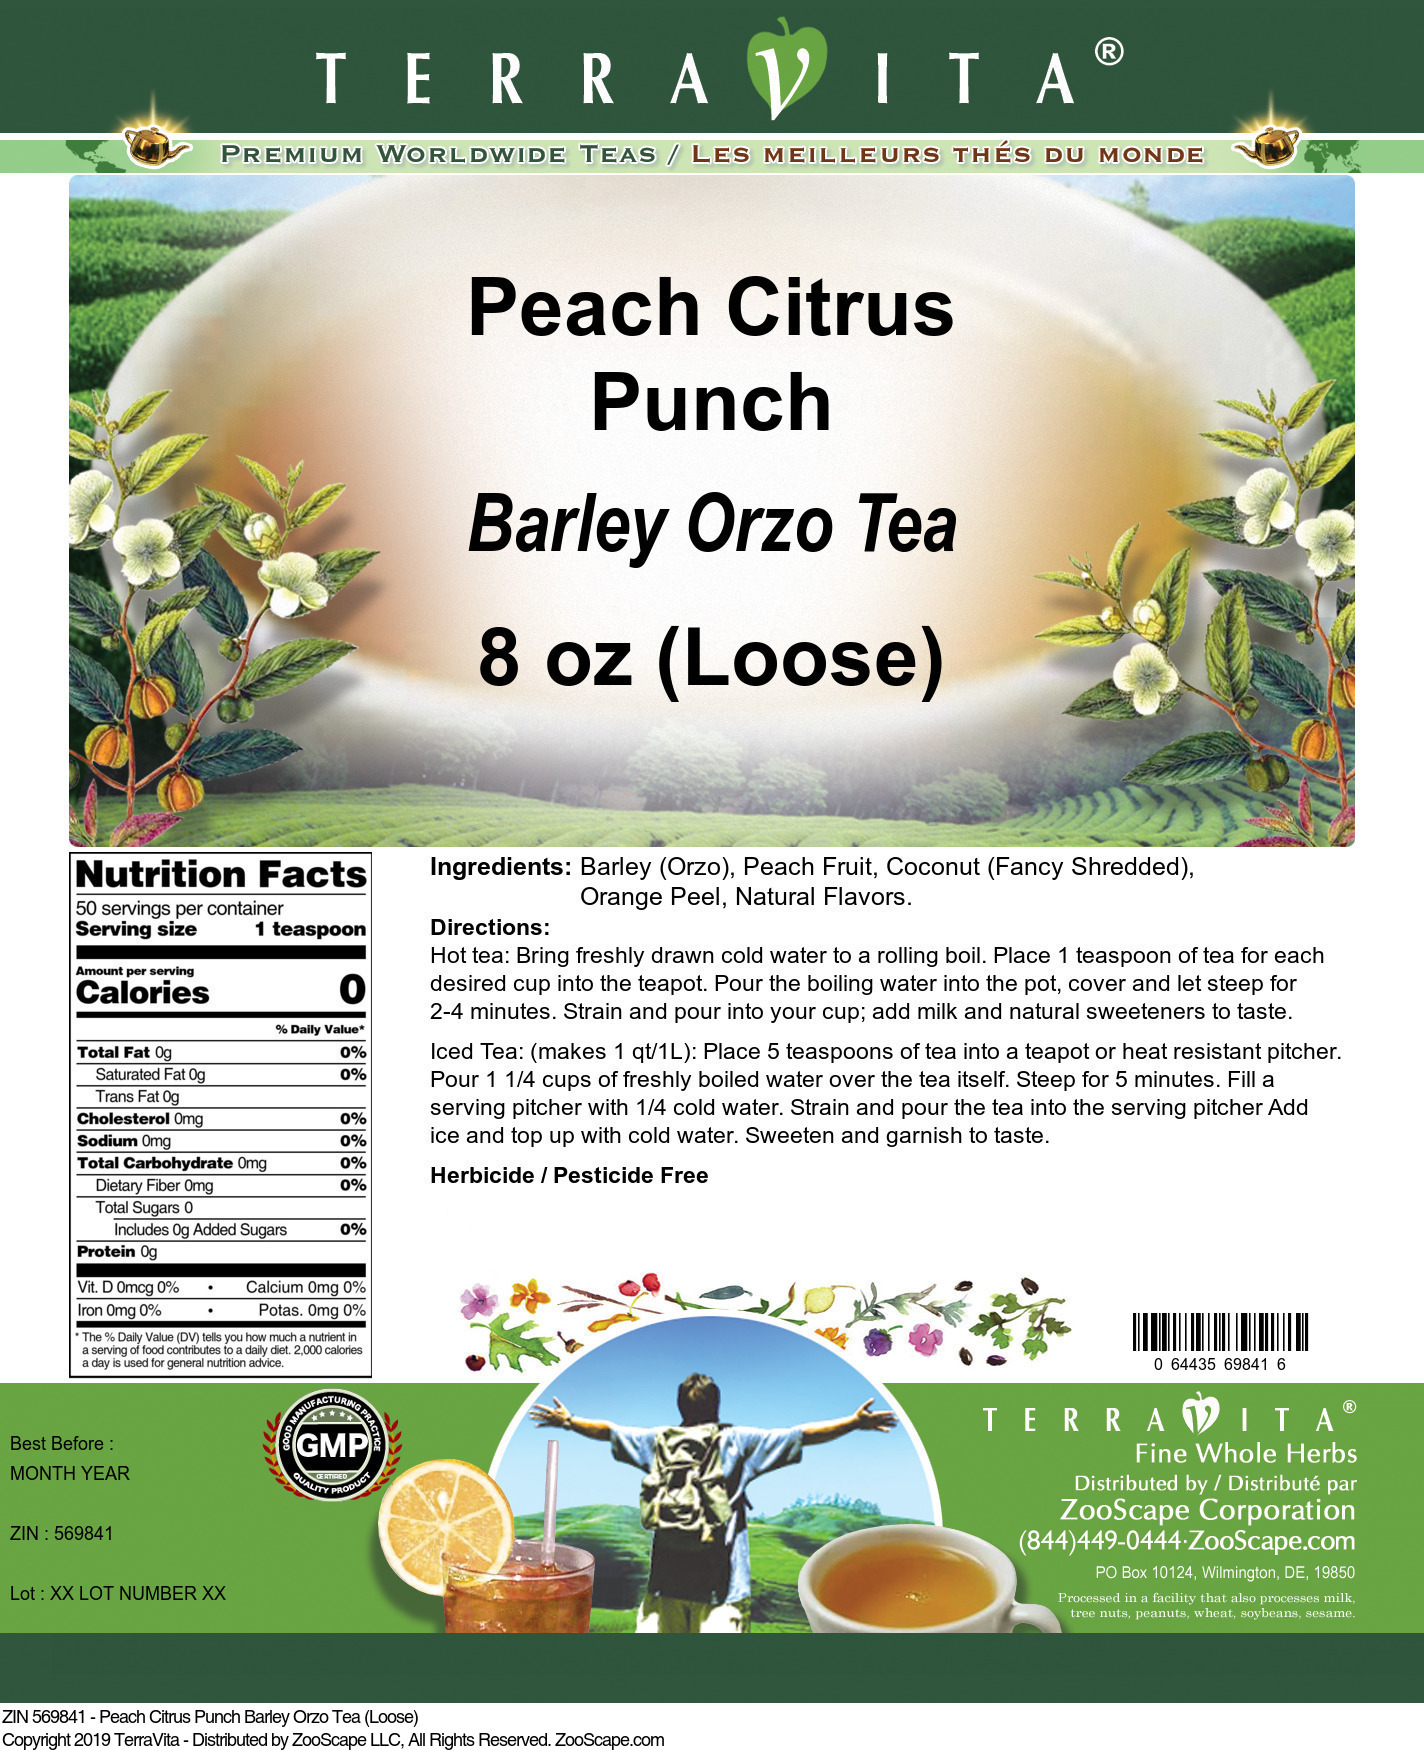 Peach Citrus Punch Barley Orzo Tea (Loose) - Label